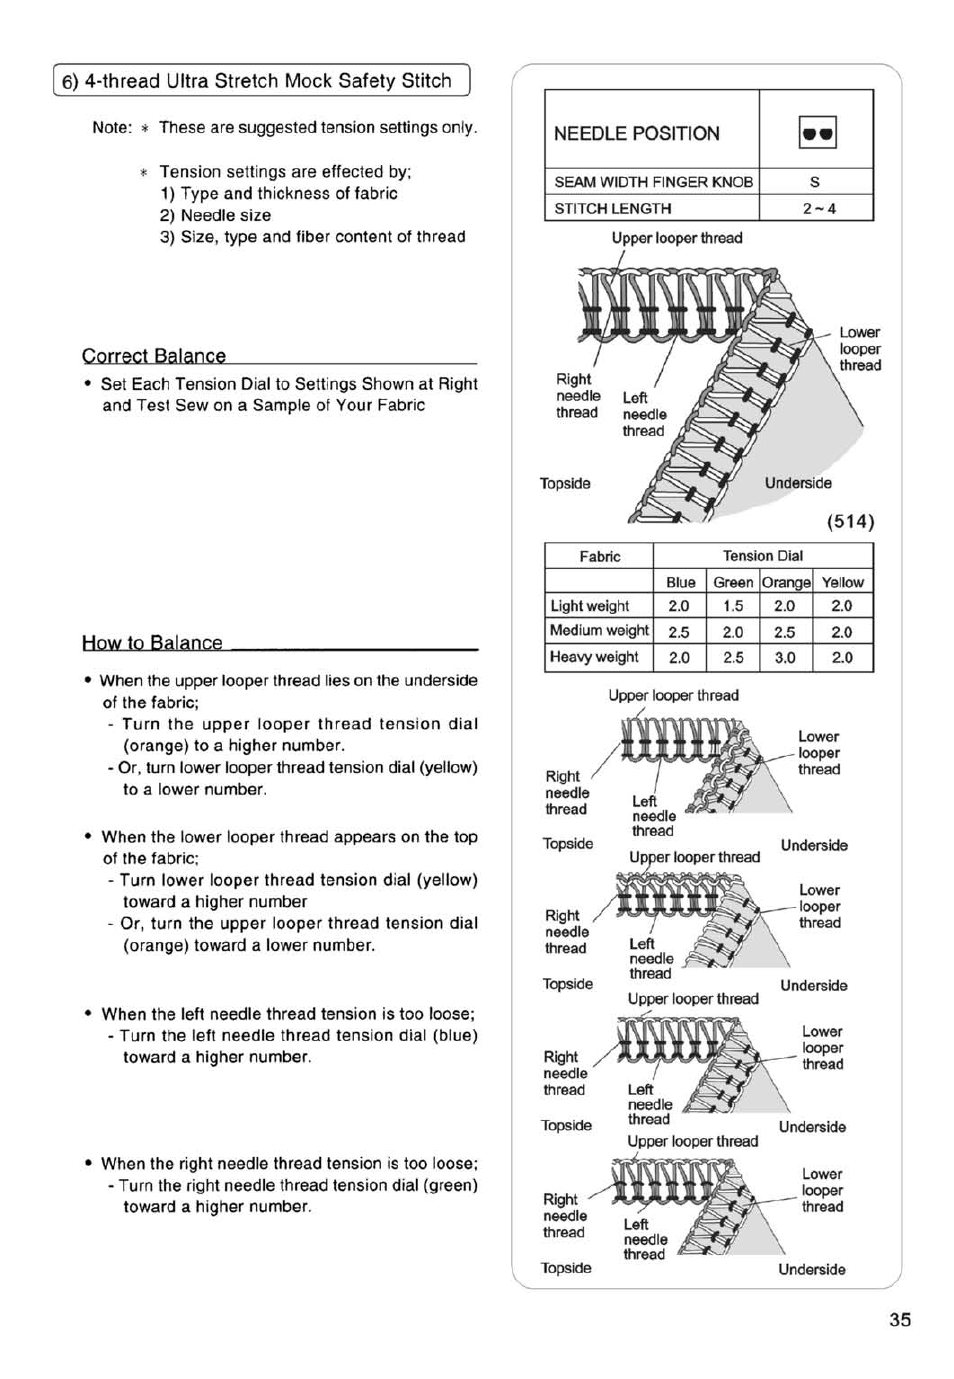 6) 4-thread ultra stretch mock safety stitch | SINGER 14SH754/14CG754 User Manual | Page 36 / 53